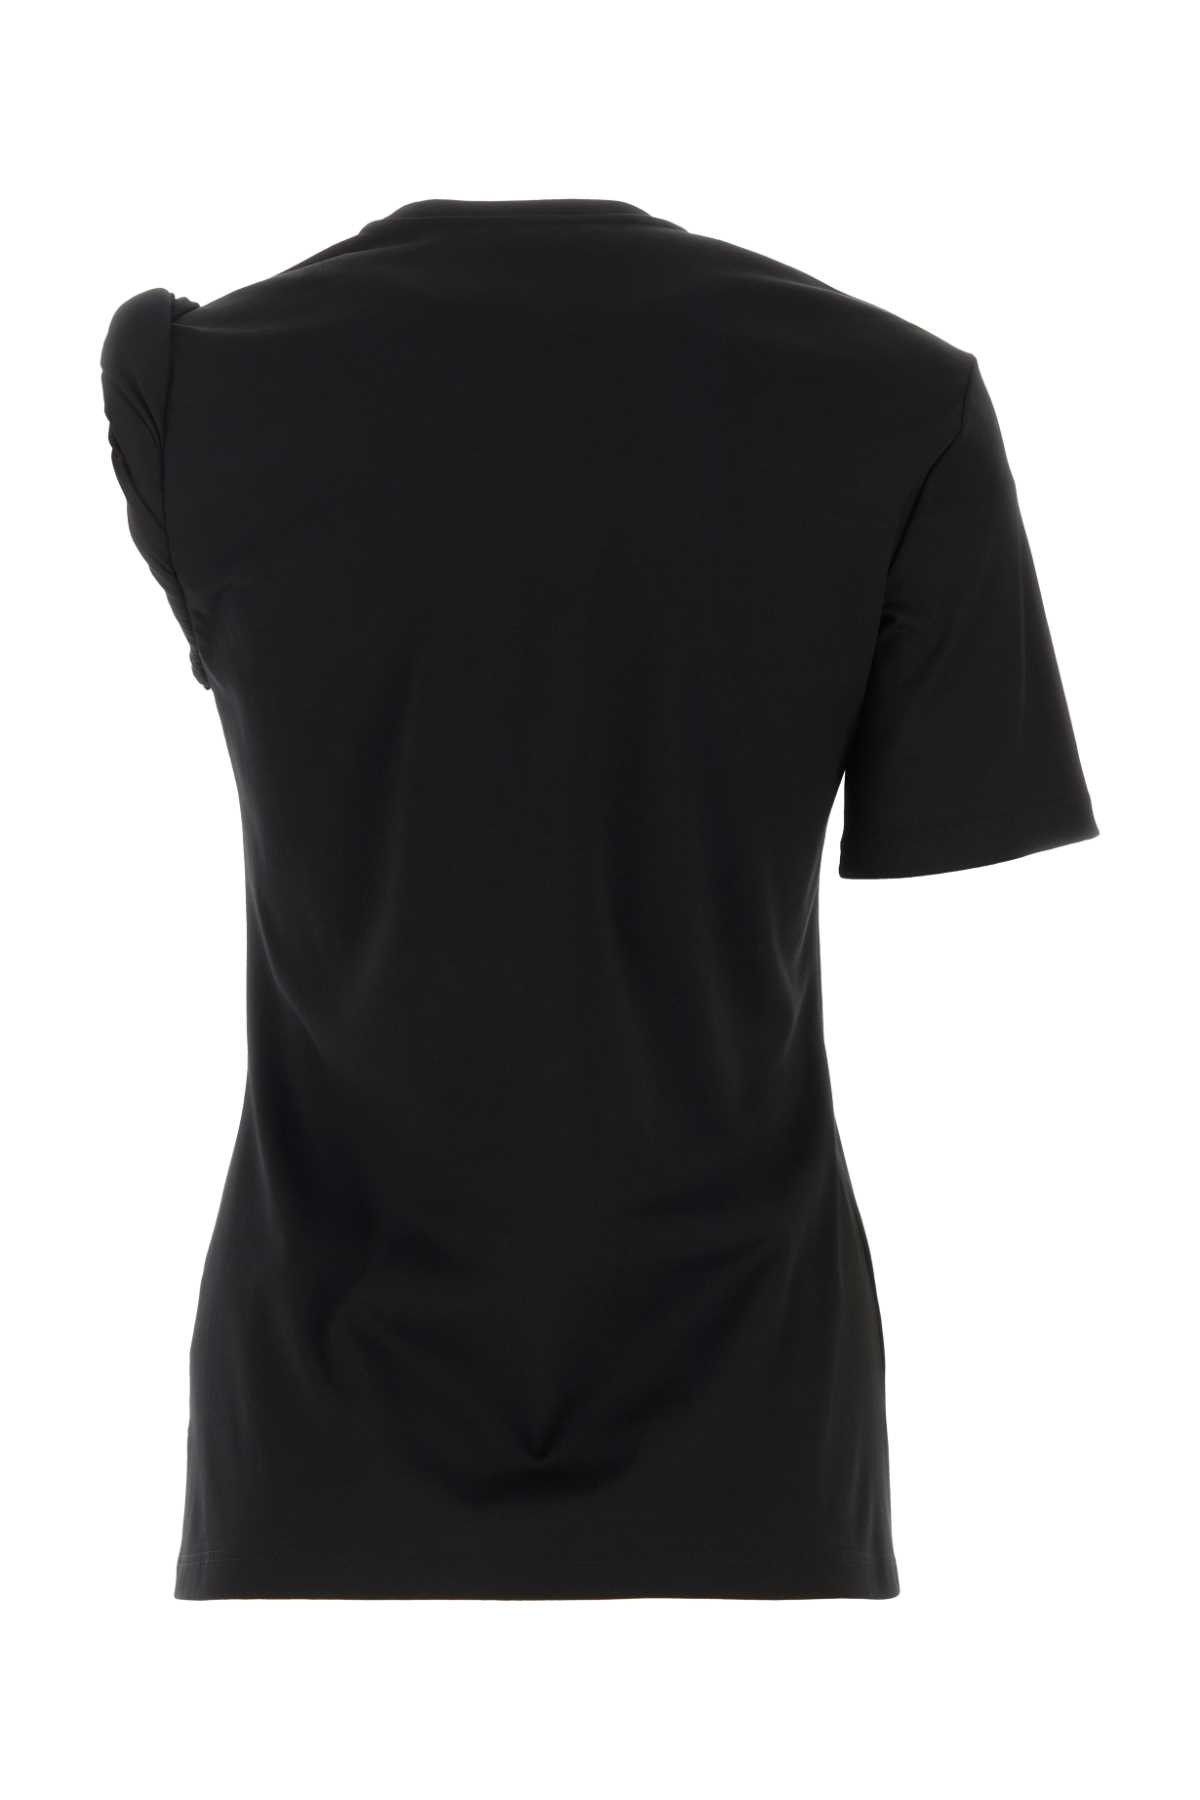 Versace Black Cotton T-shirt In 1b000